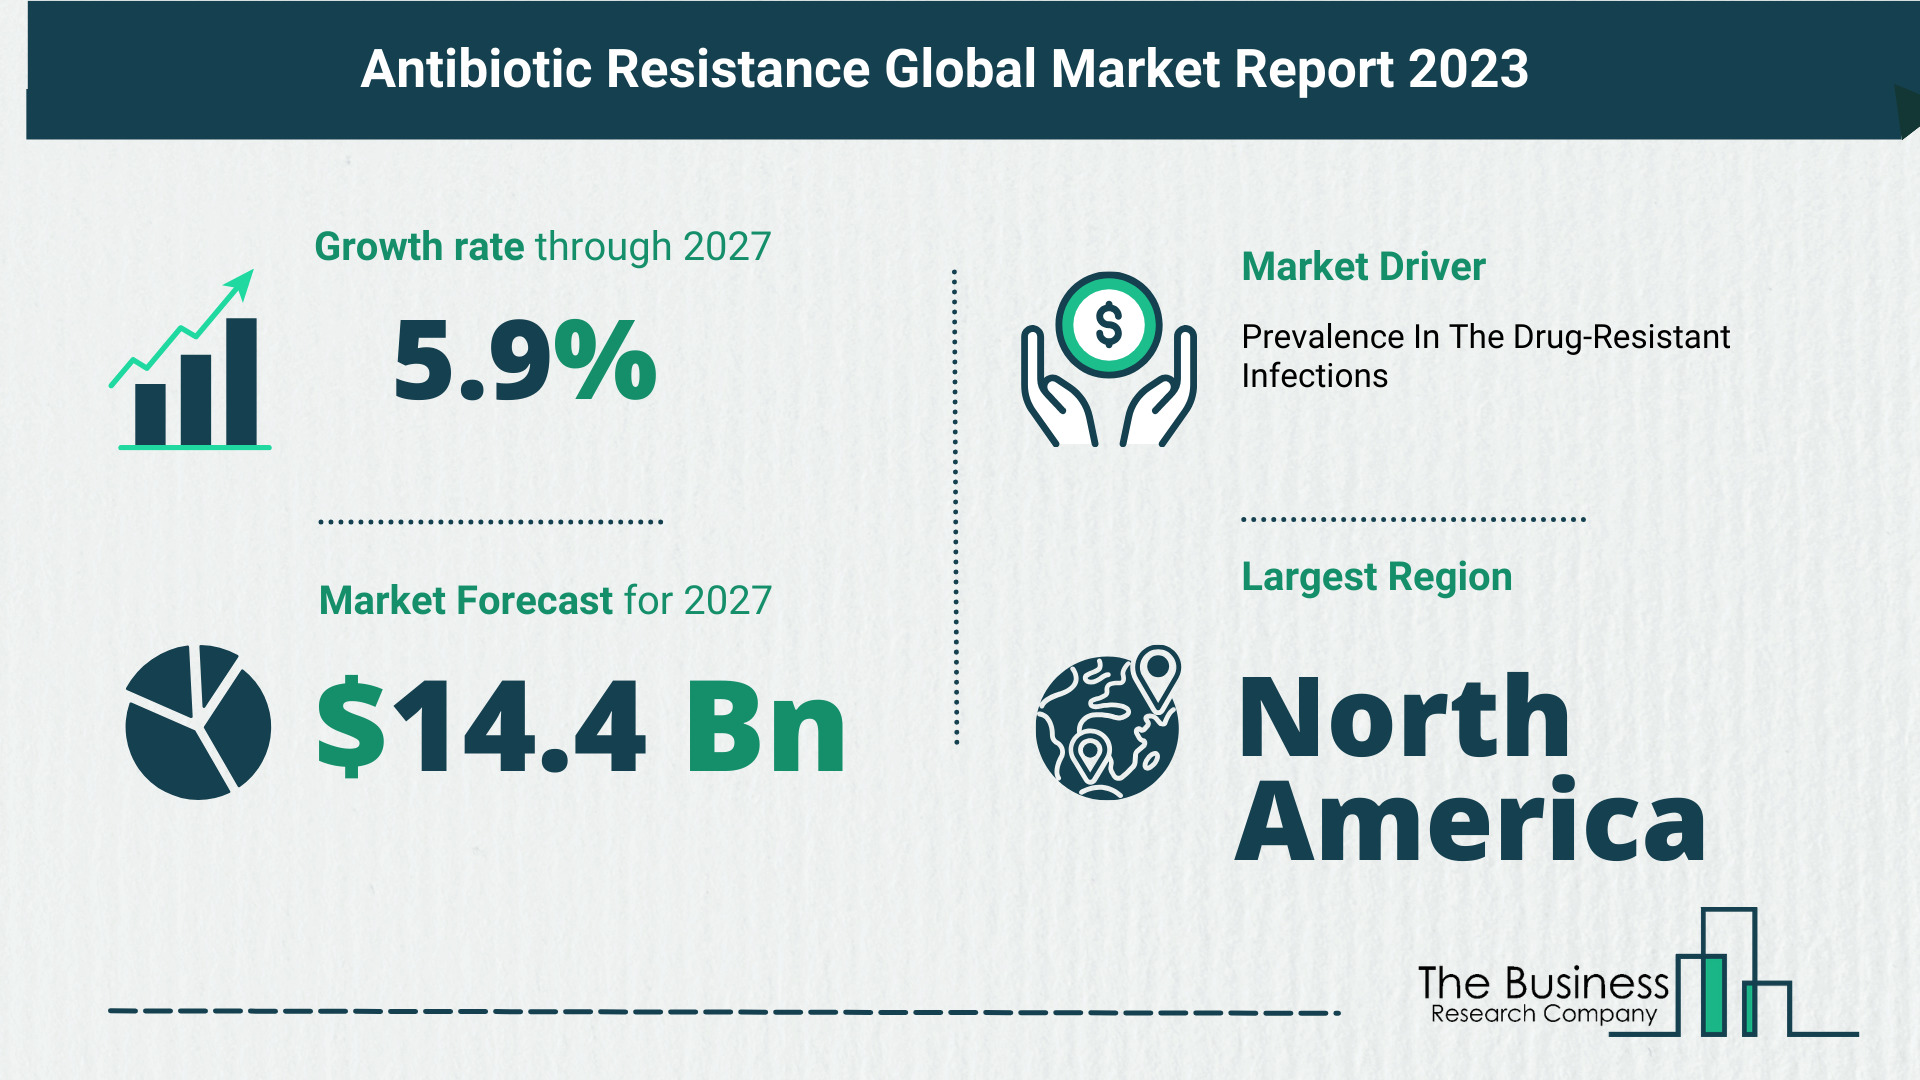 Global Antibiotic Resistance Market Size